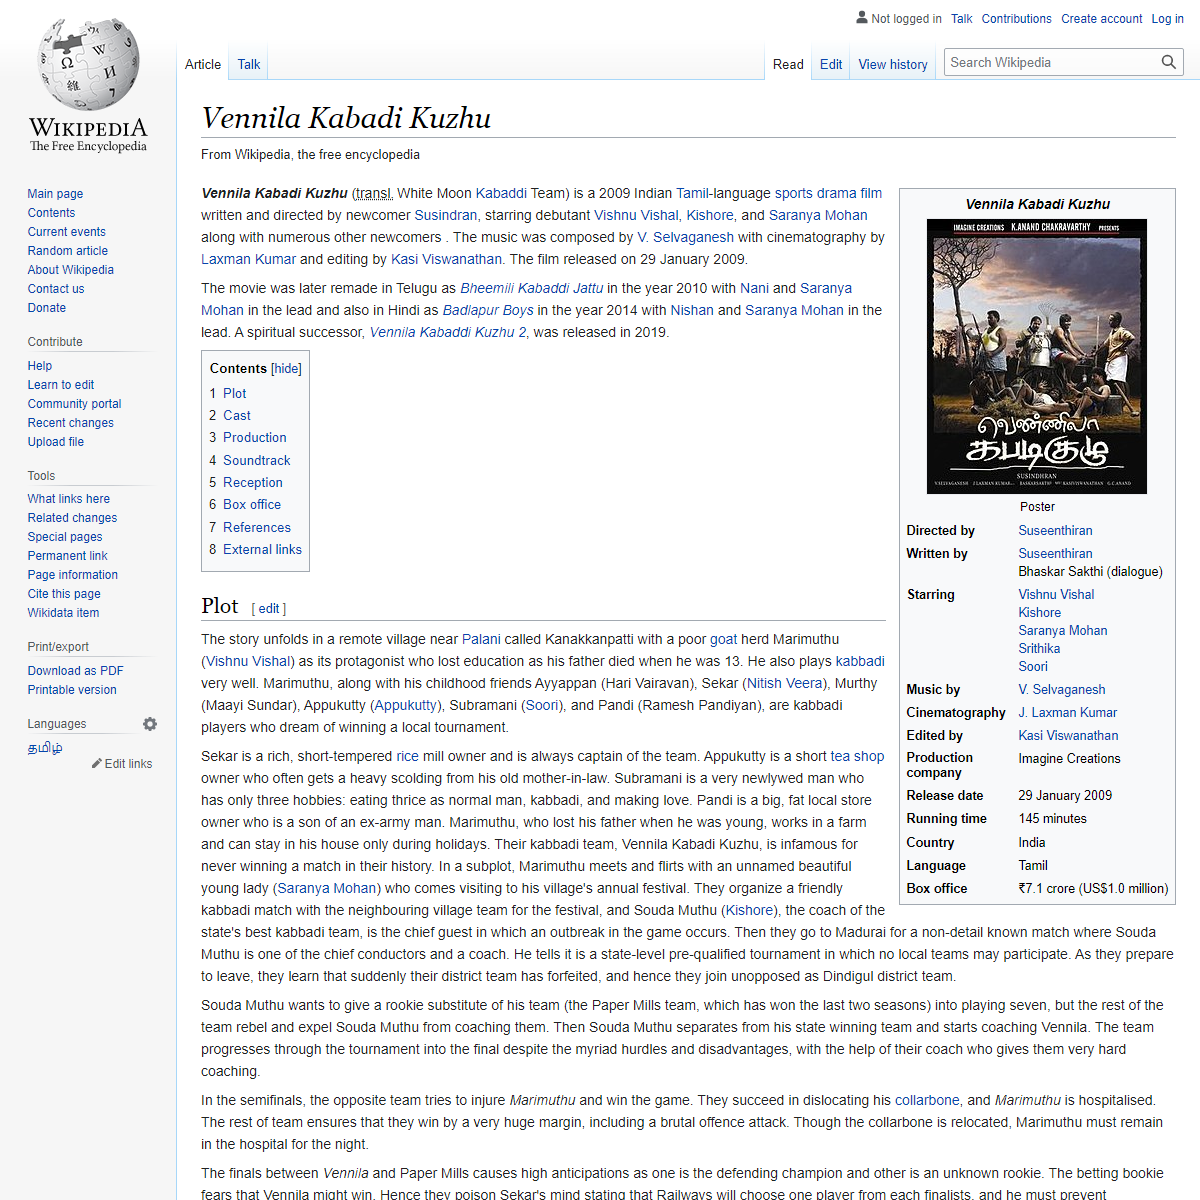 A complete backup of https://en.wikipedia.org/wiki/Vennila_Kabadi_Kuzhu